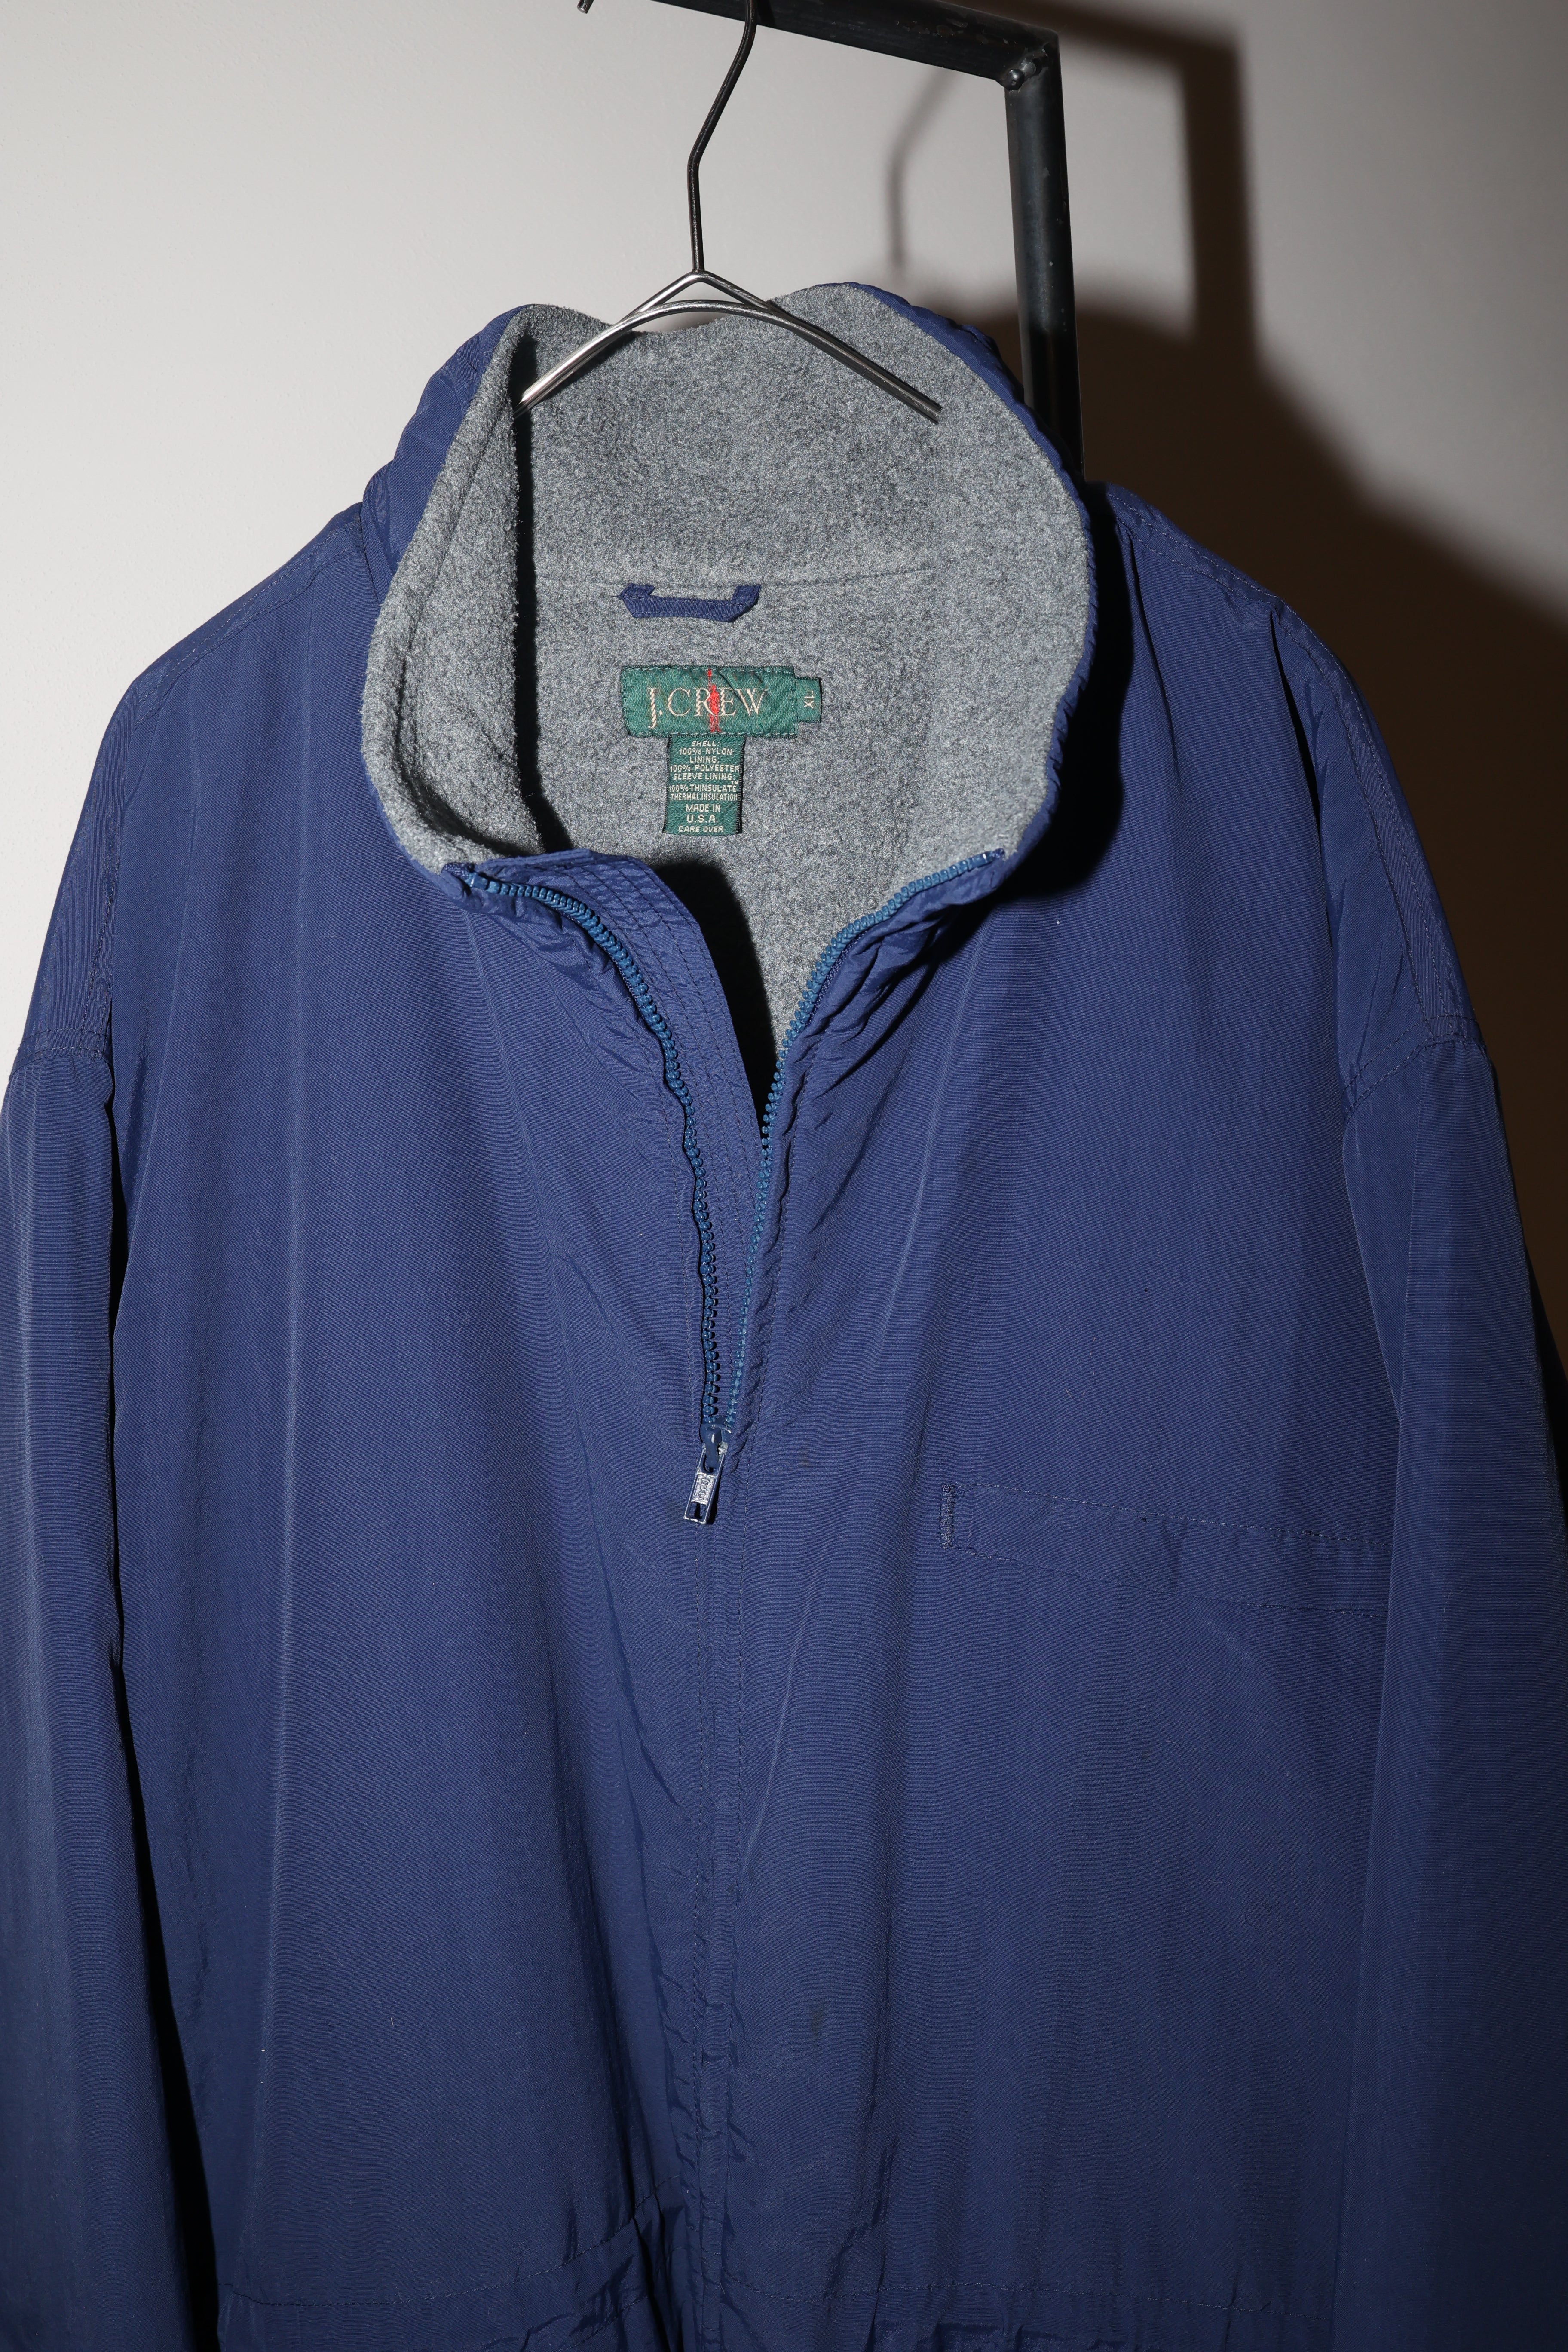 90's J.CREW nylon fleece liner jacket